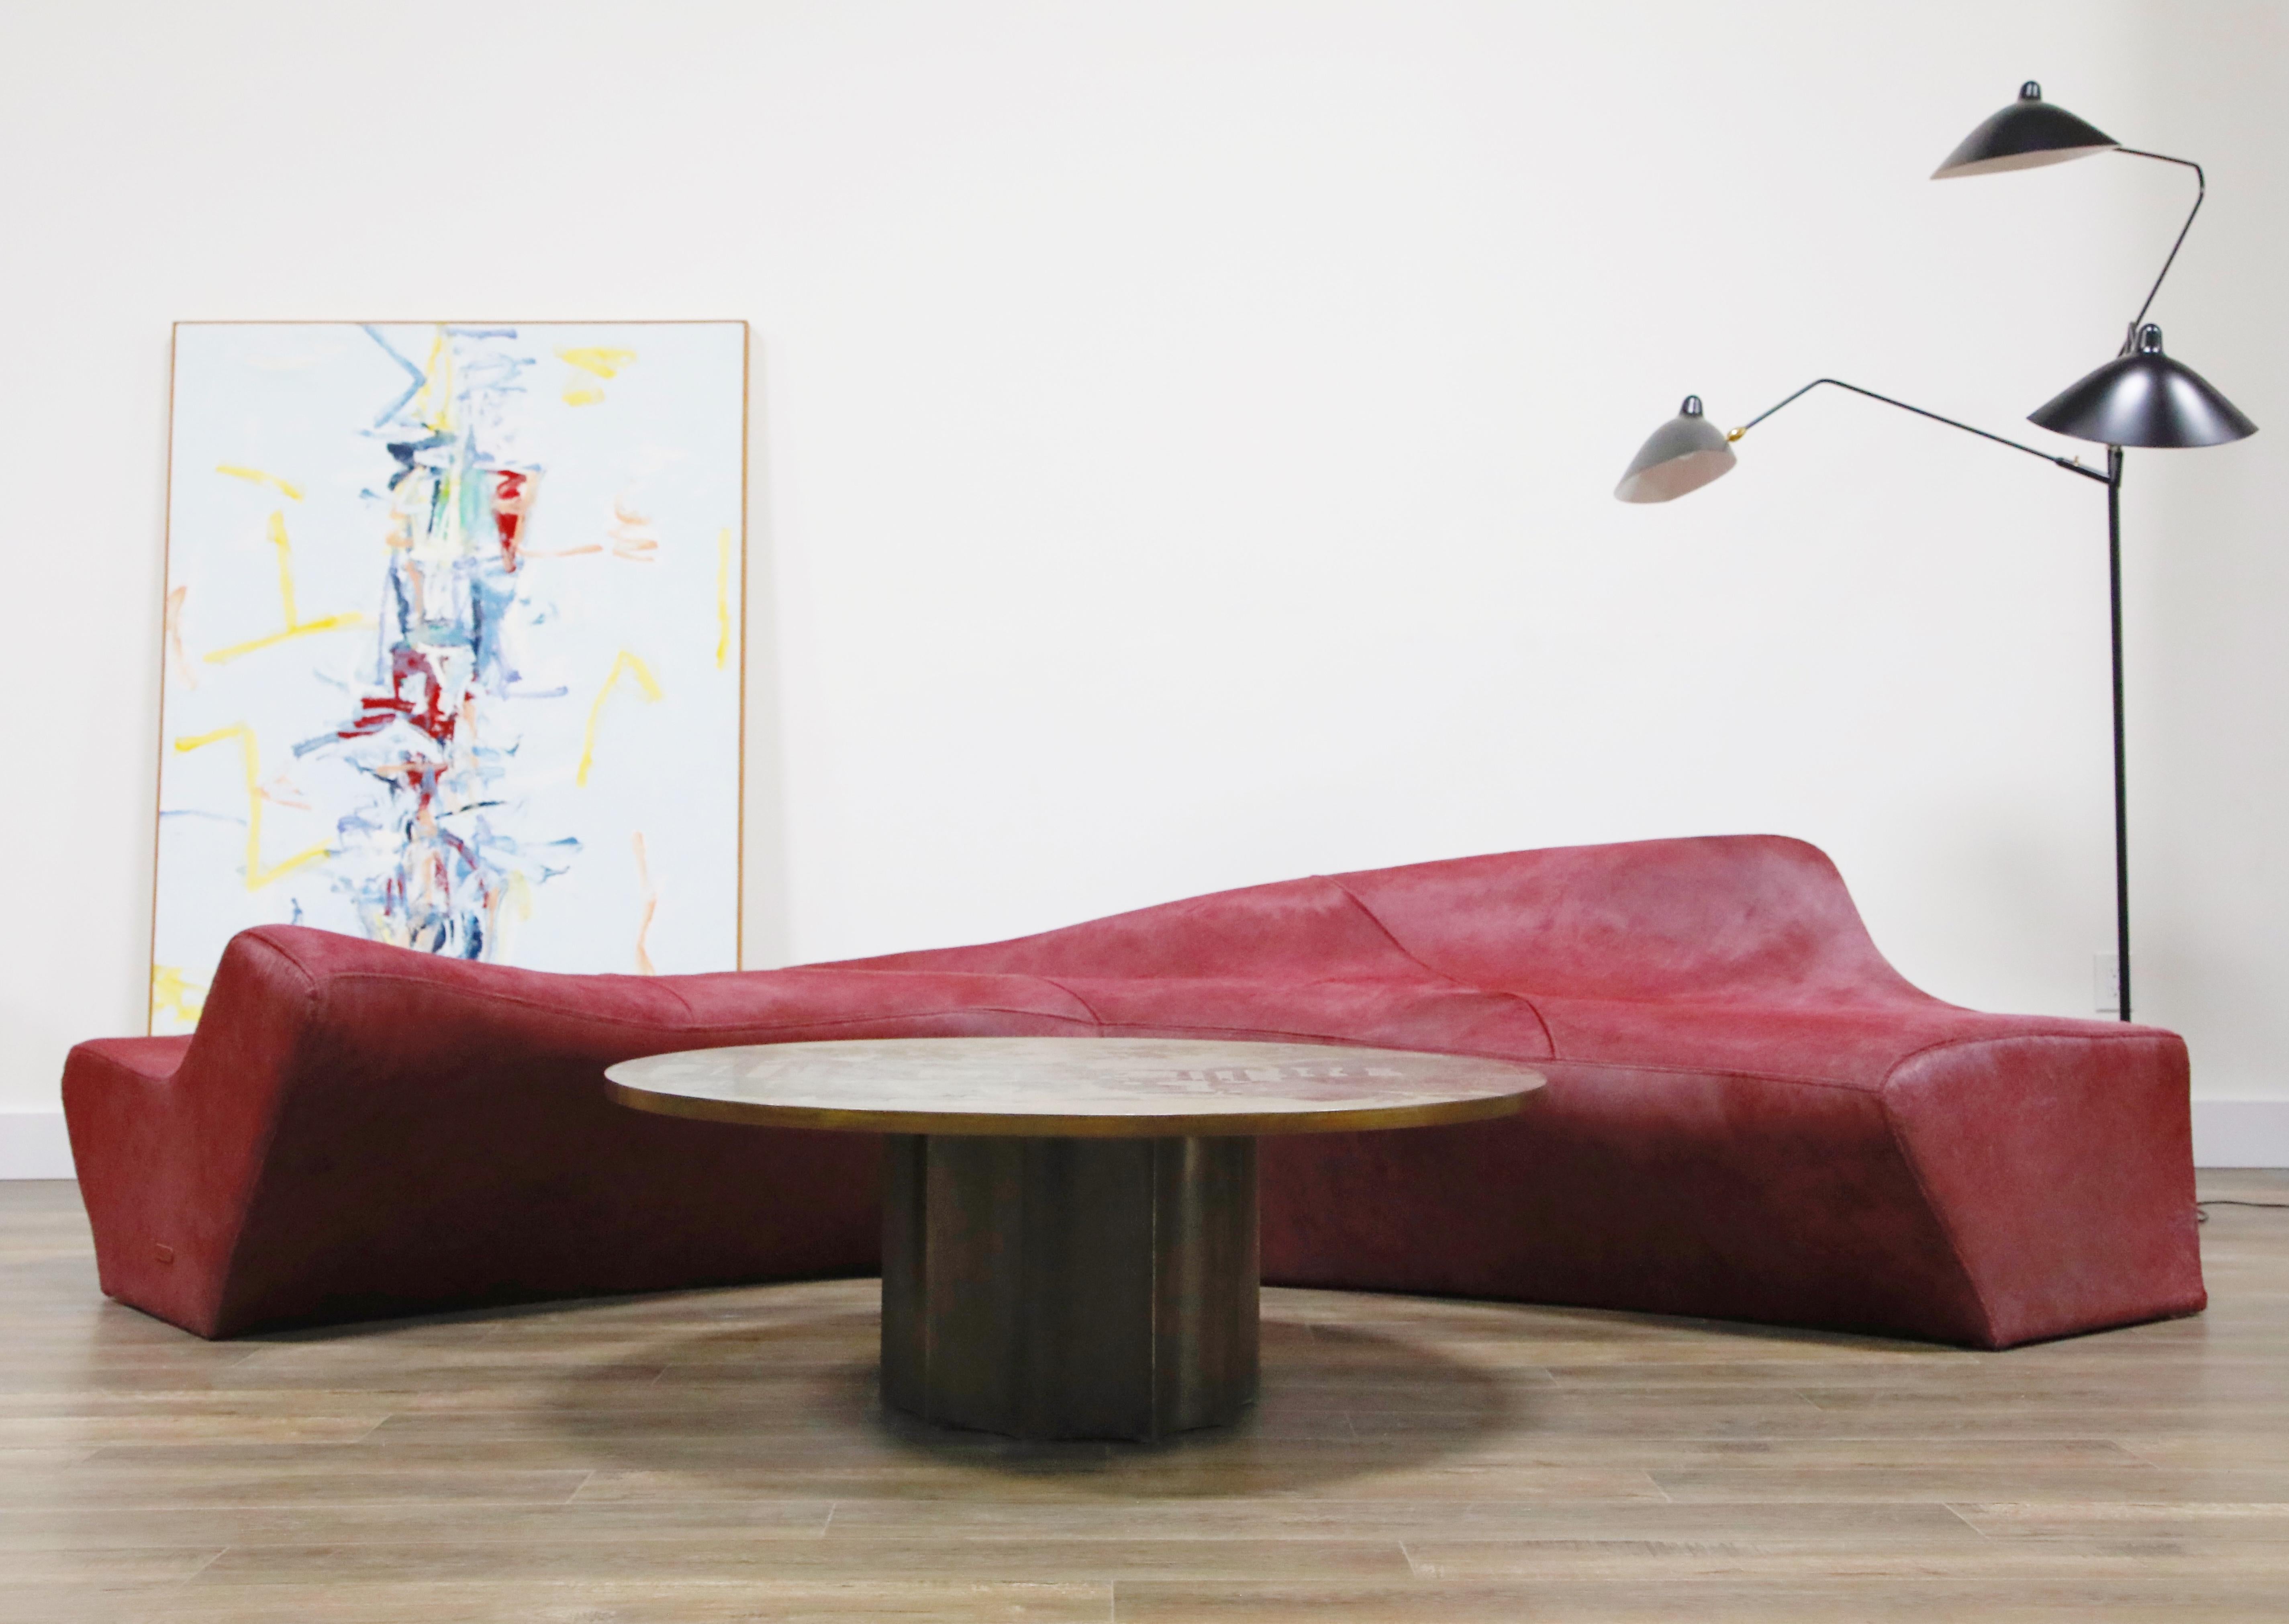 American 'Moraine' Biomorphic Sofa by Zaha Hadid for Sawaya & Moroni Italy, 2000, Signed